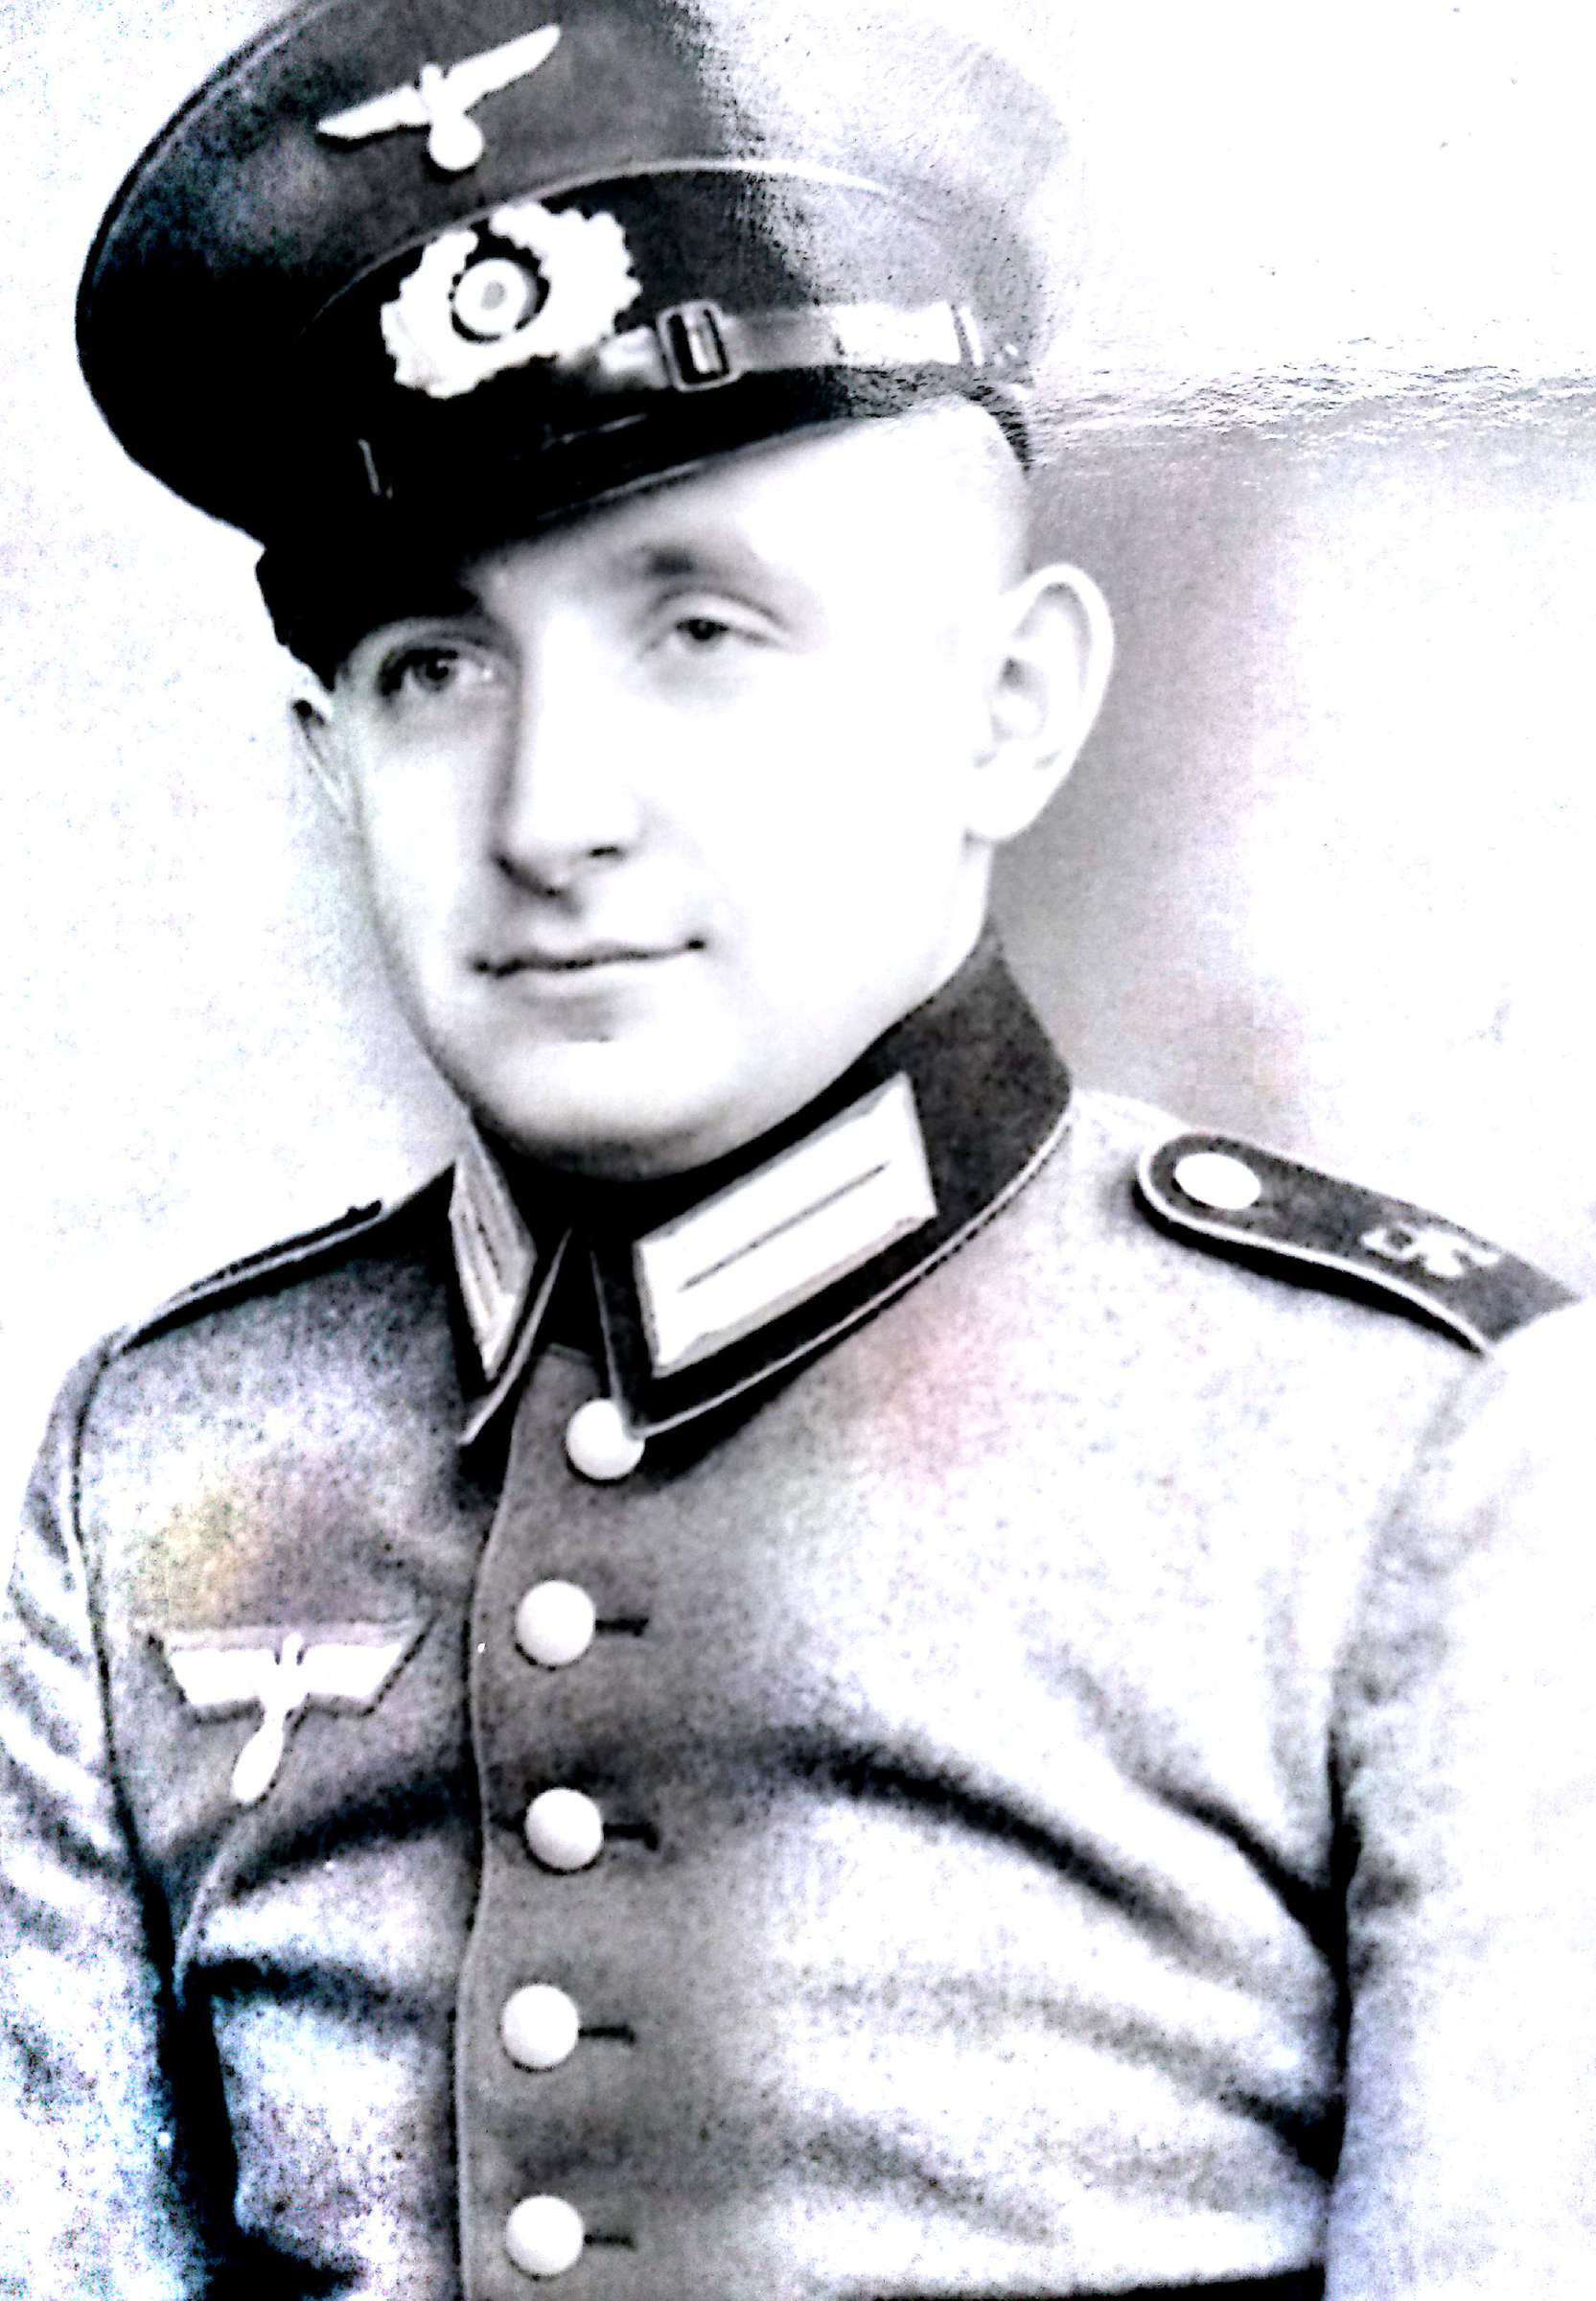 Portrét Jan Gomola v uniformě Wehrmachtu - dobový